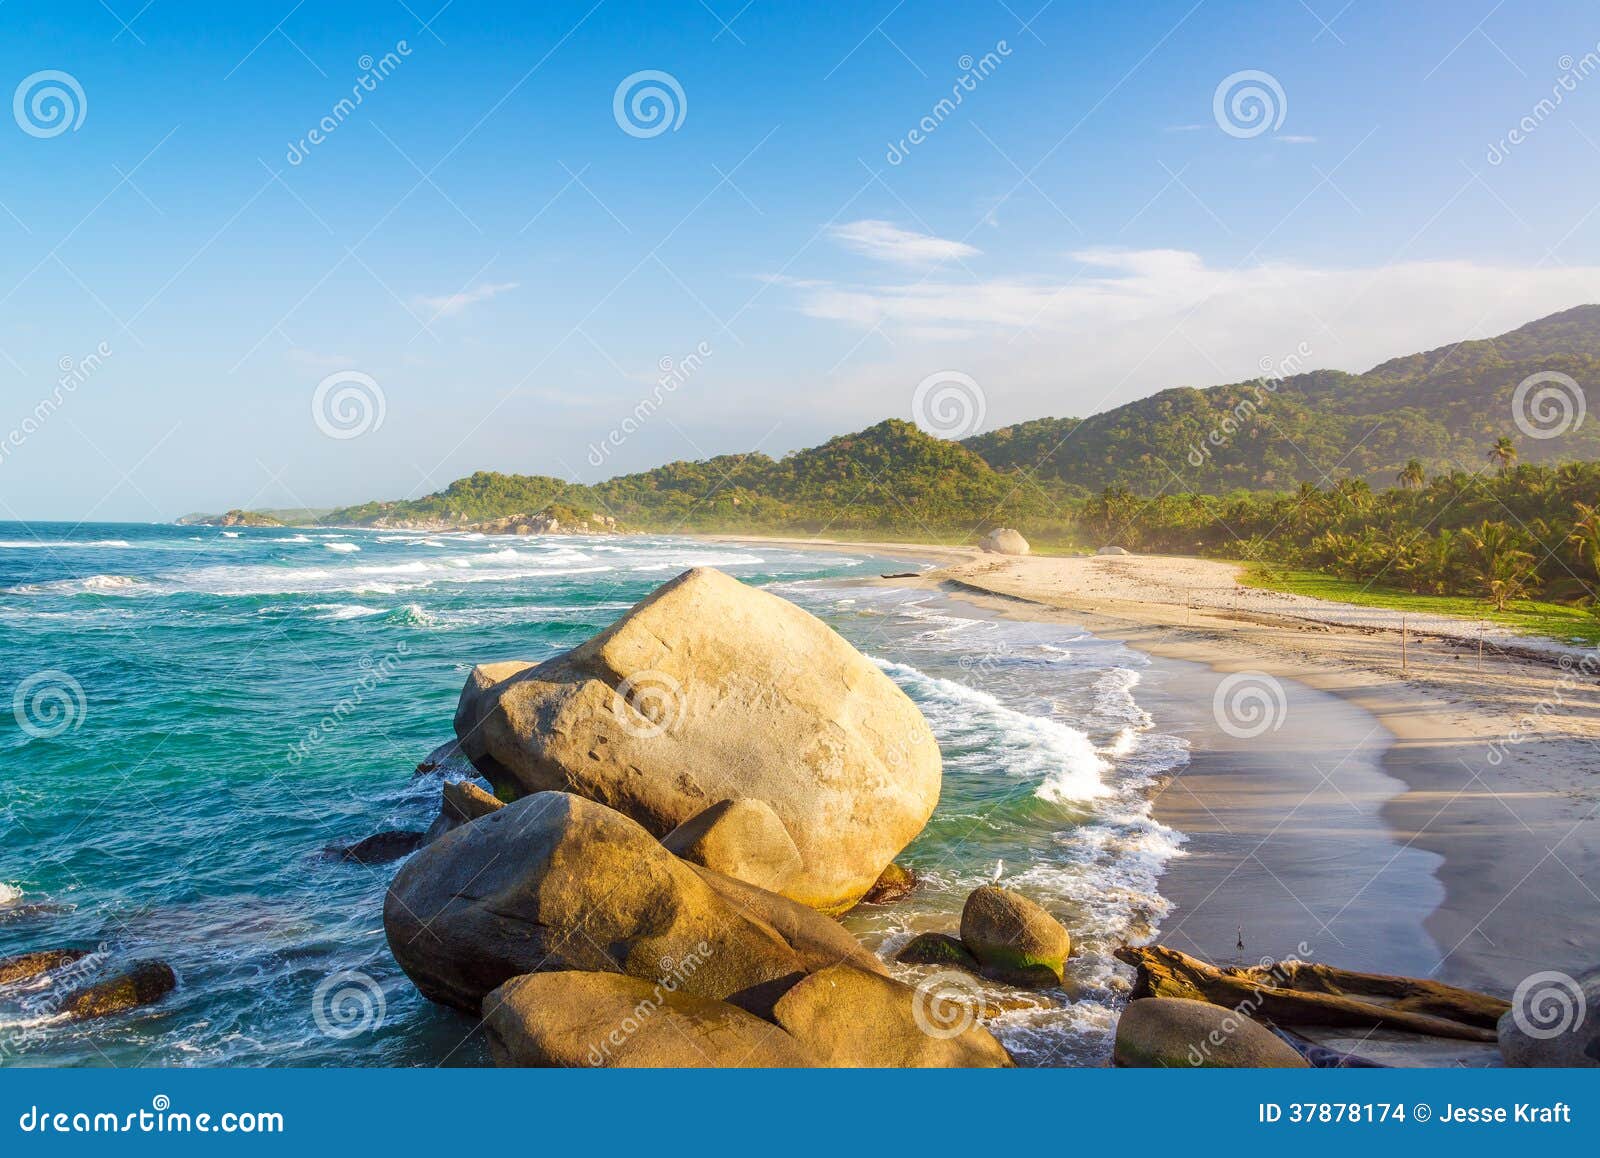 tayrona beach and rocks